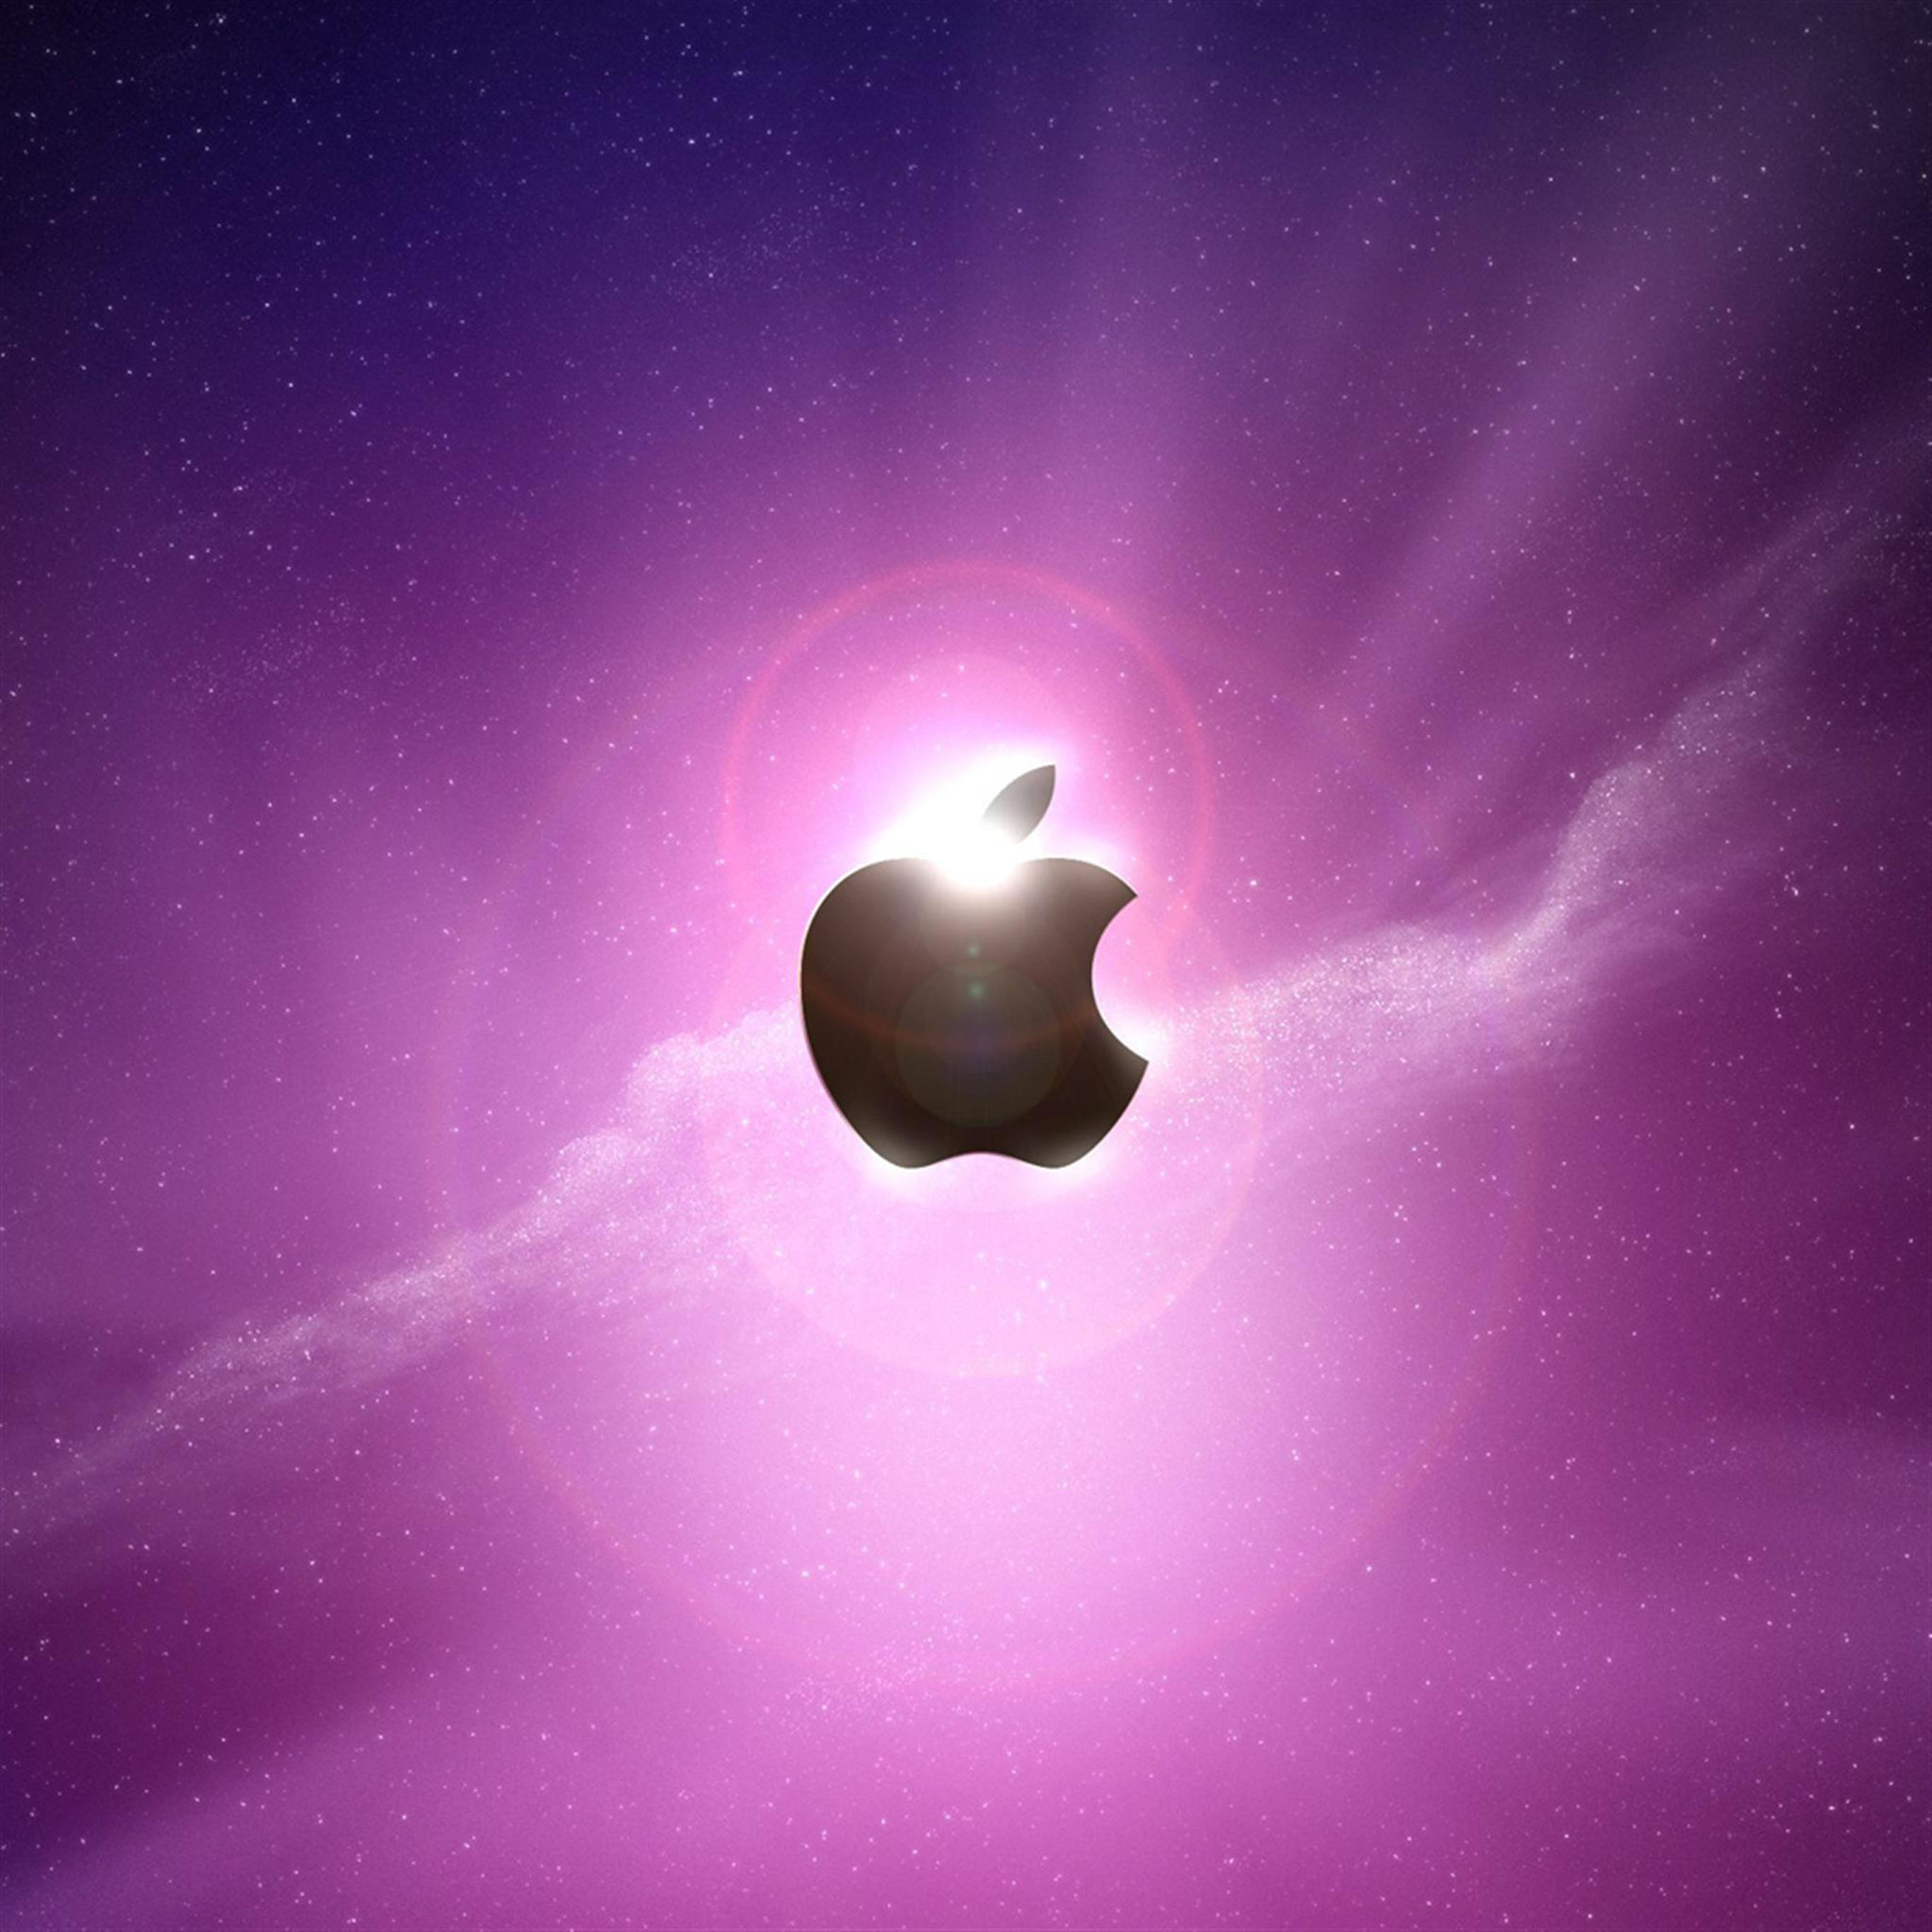 Space Apple logo wallpaper by d3ljGu - Download on ZEDGE™ | d473